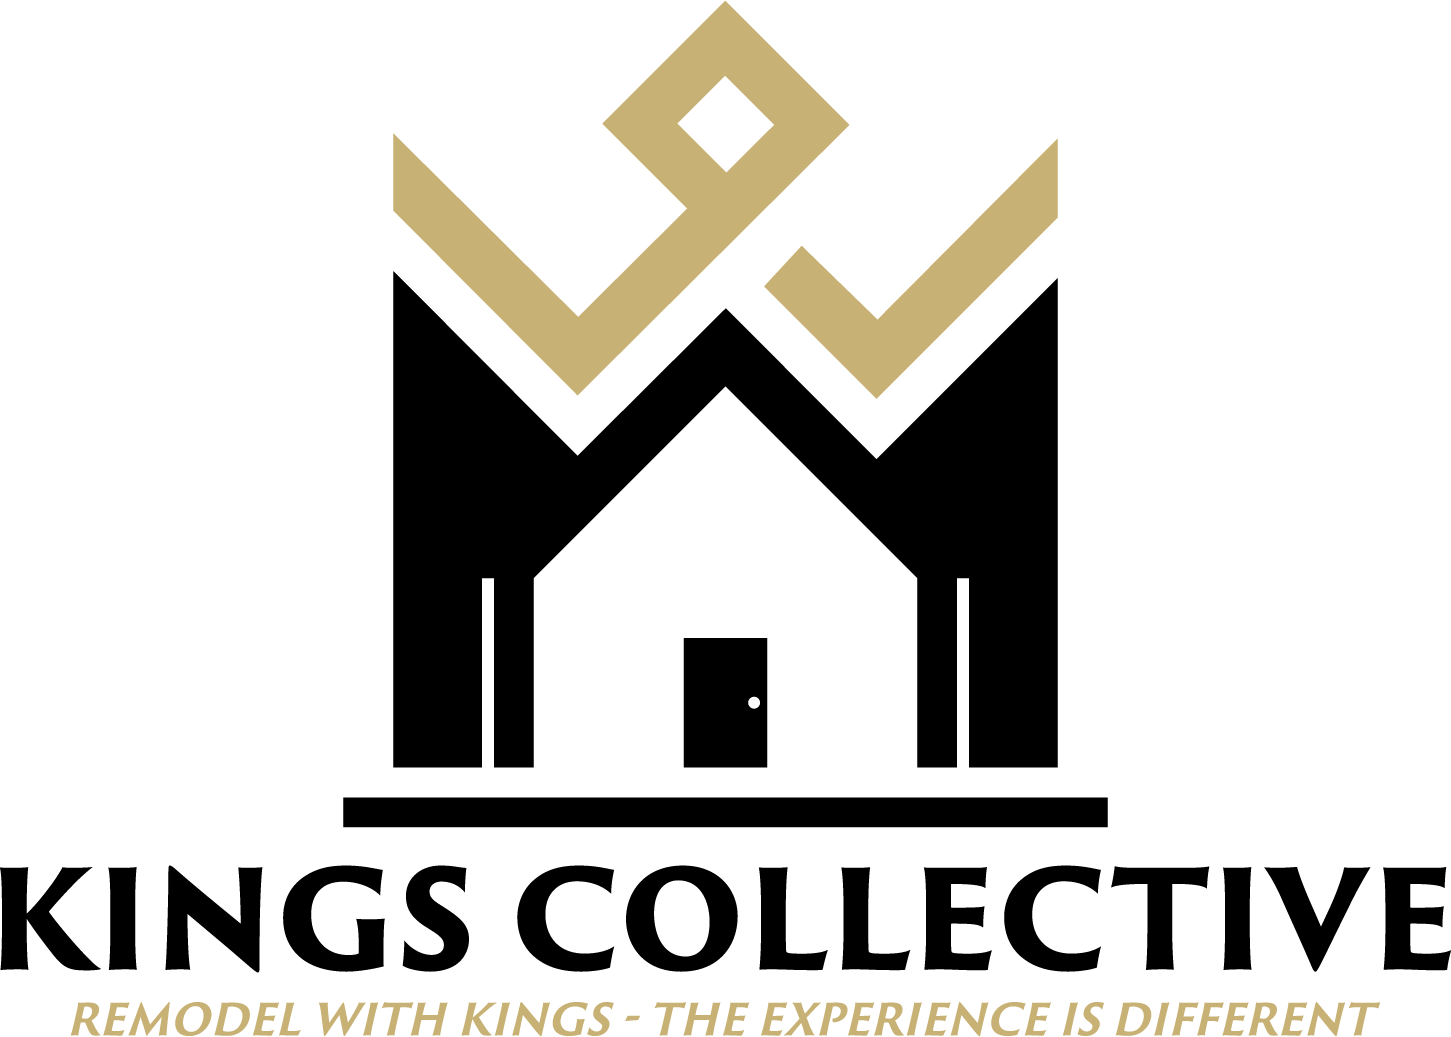 Kings Collective Logo